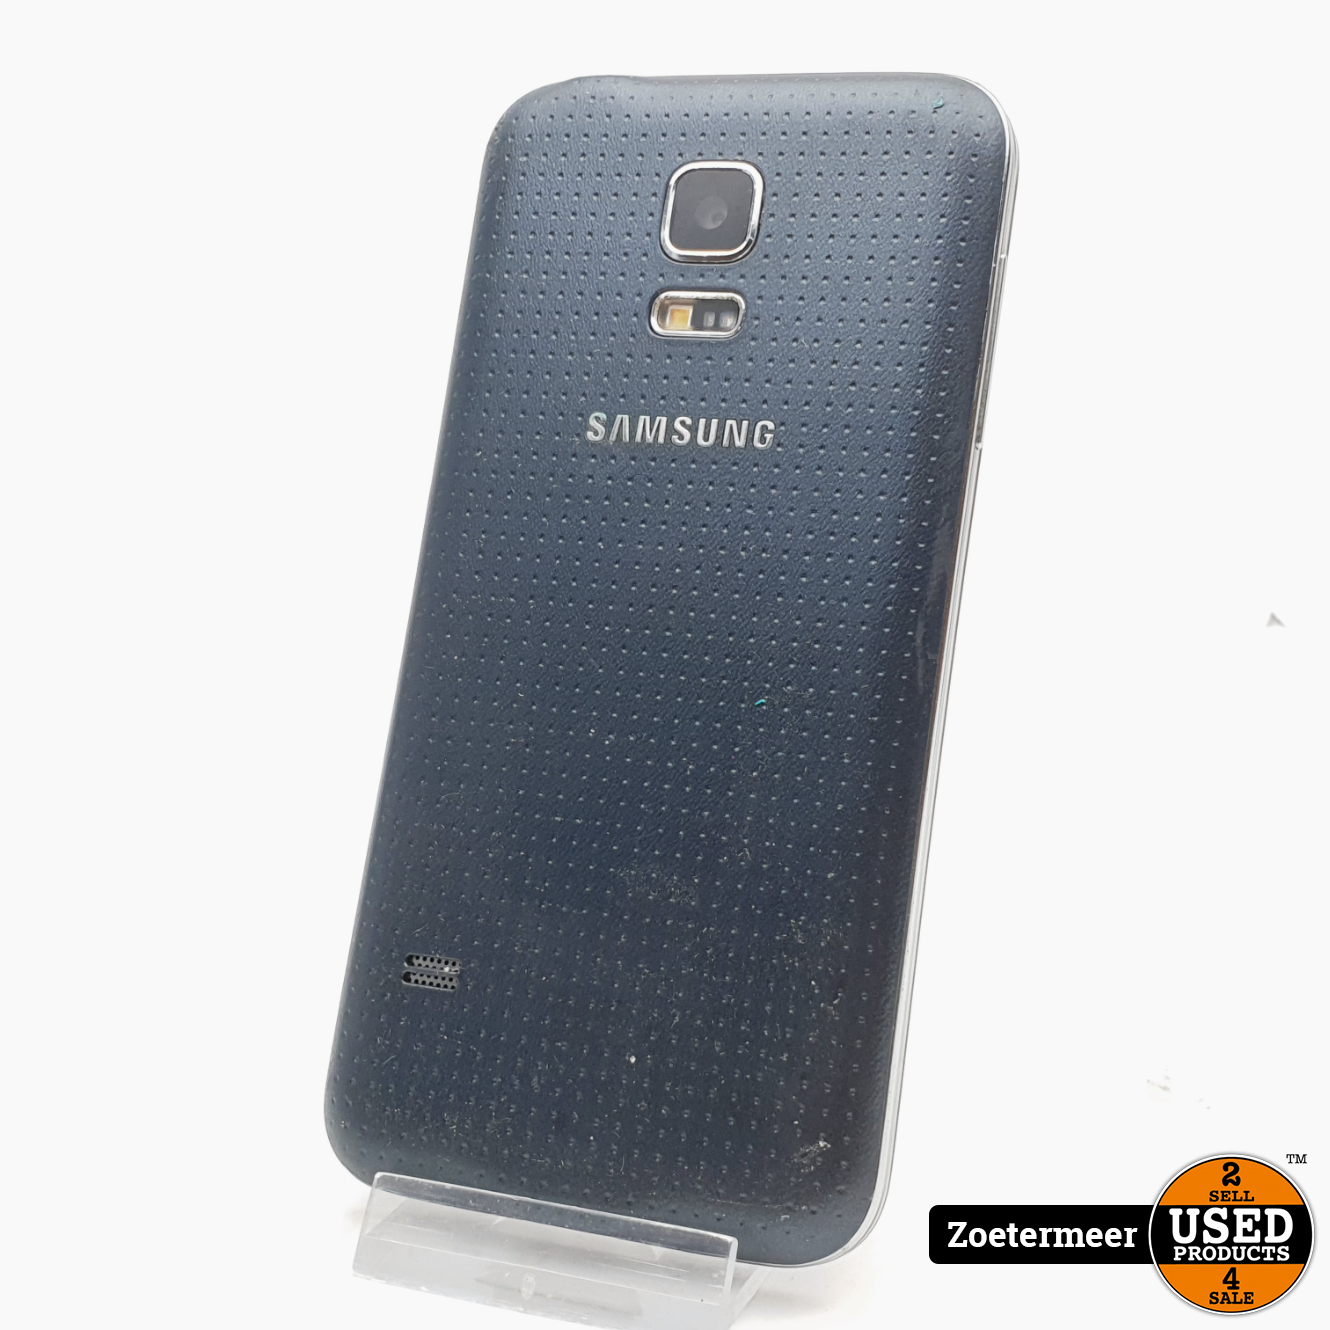 Reizen Melodieus Manifesteren Samsung Galaxy S5 Mini 16GB - Used Products Zoetermeer